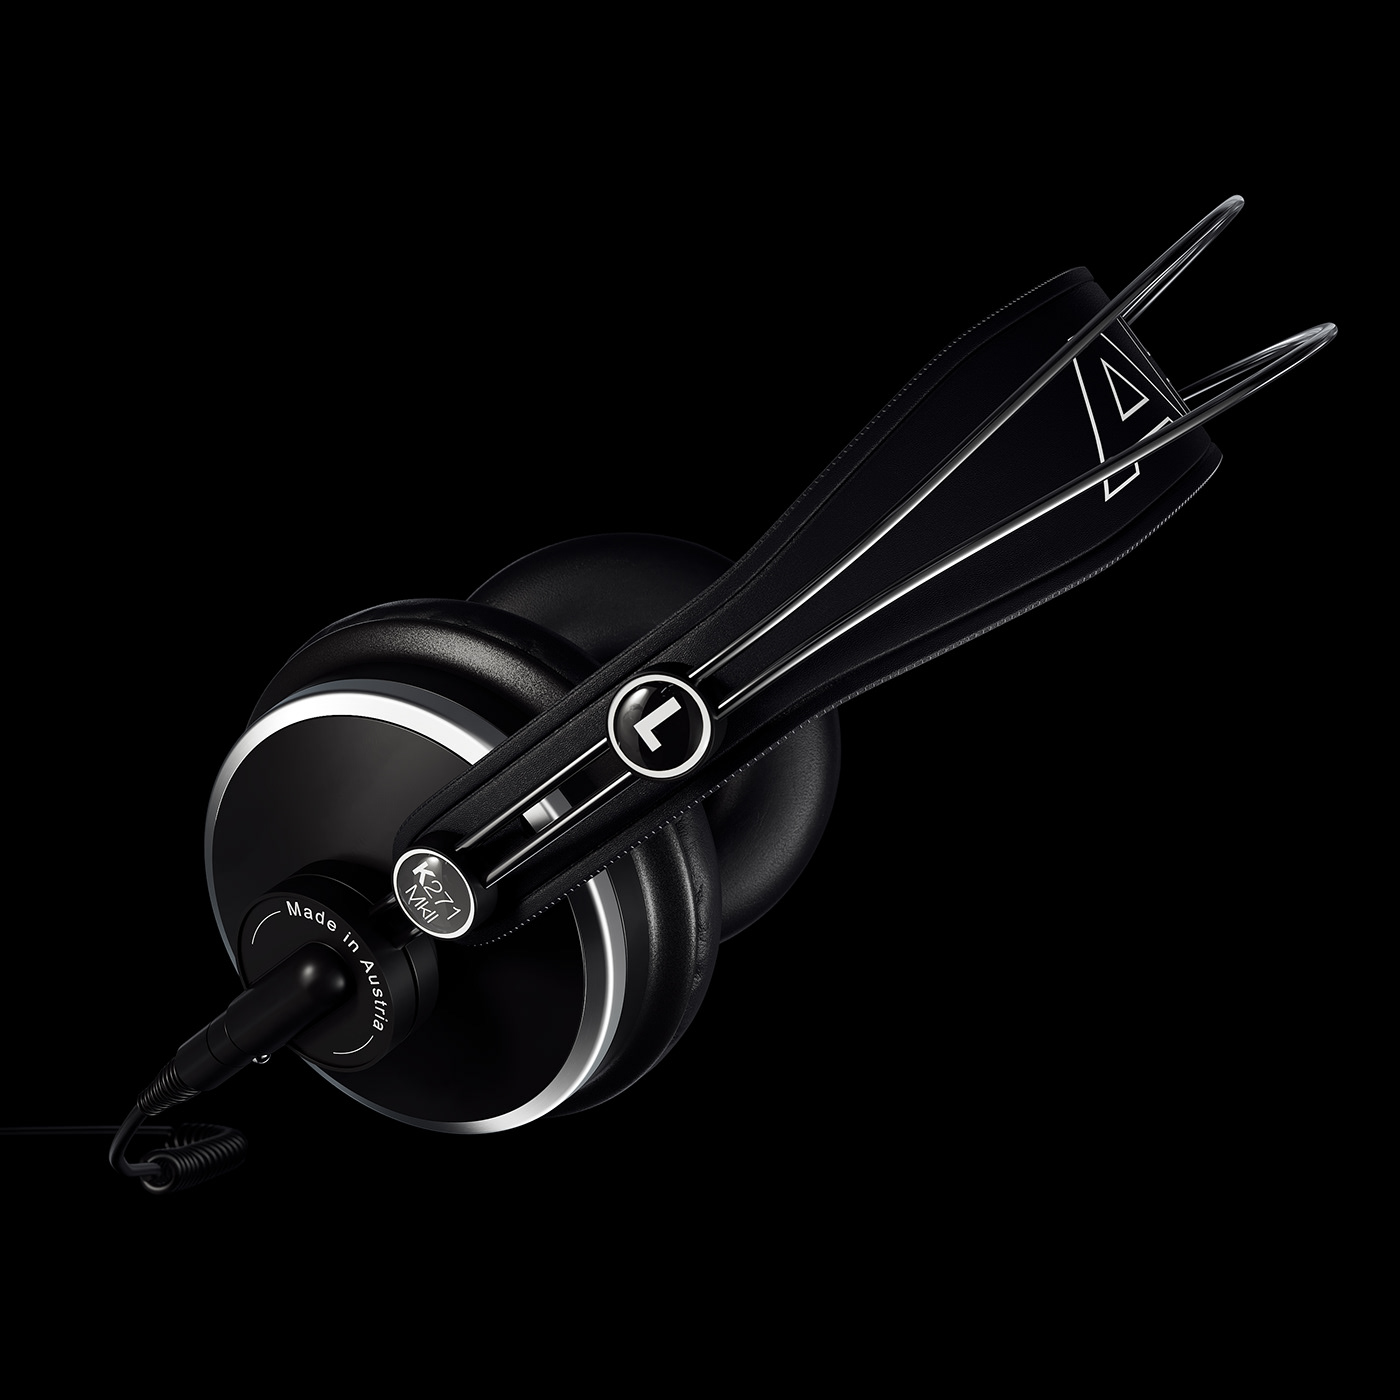 3D akg c4d CGI headphones K271MK2 photorealistic product rendering Technology